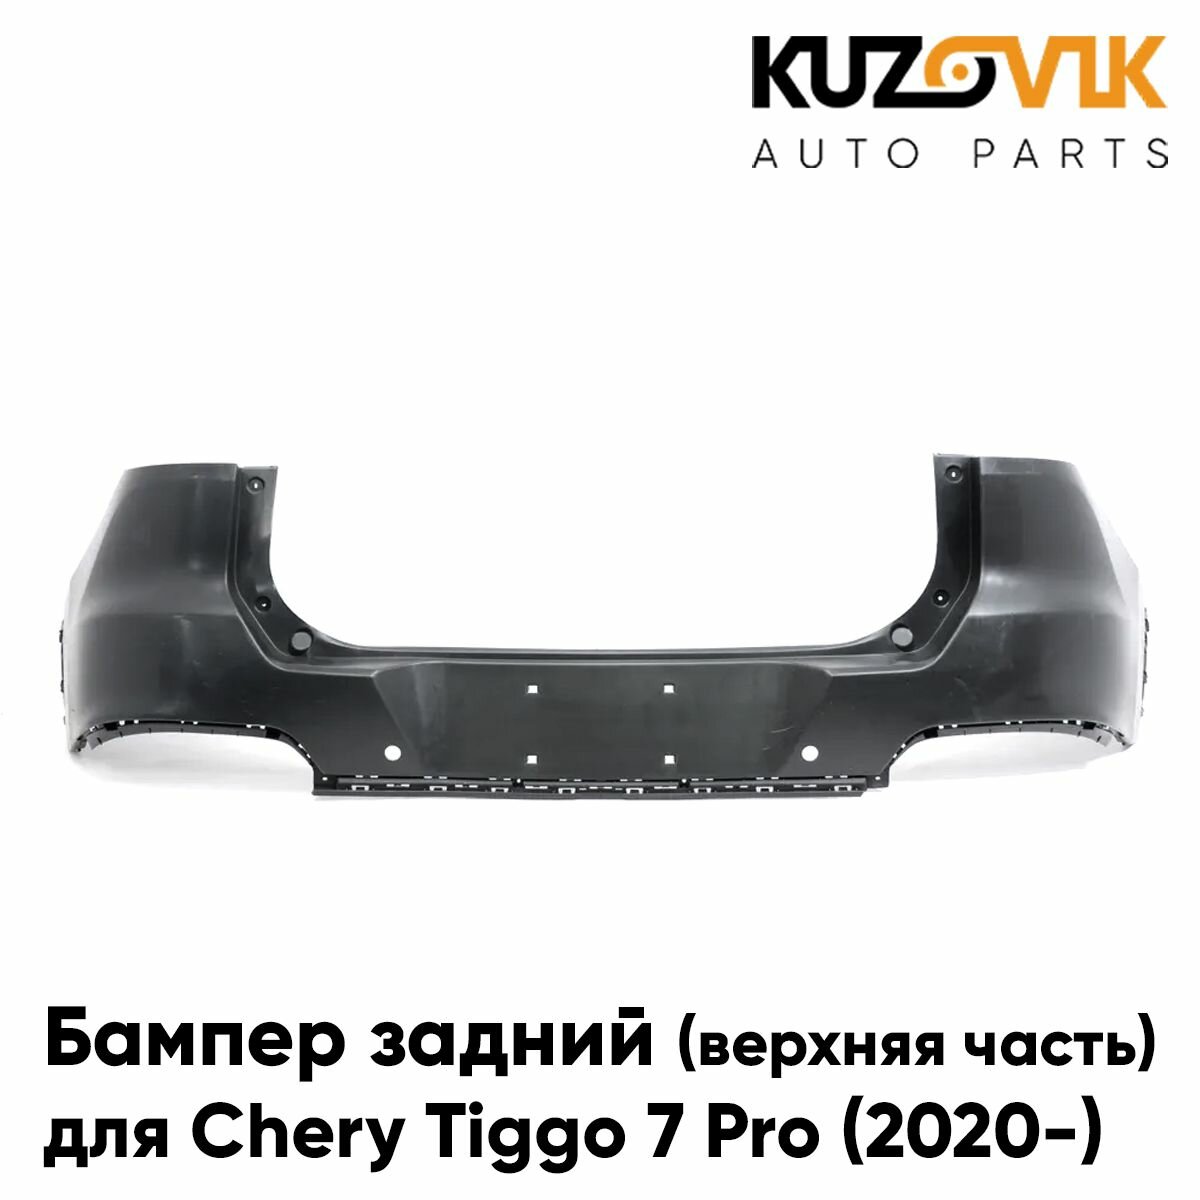 Бампер задний для Чери Тигго Chery Tiggo 7 Pro (2020-) верхняя часть